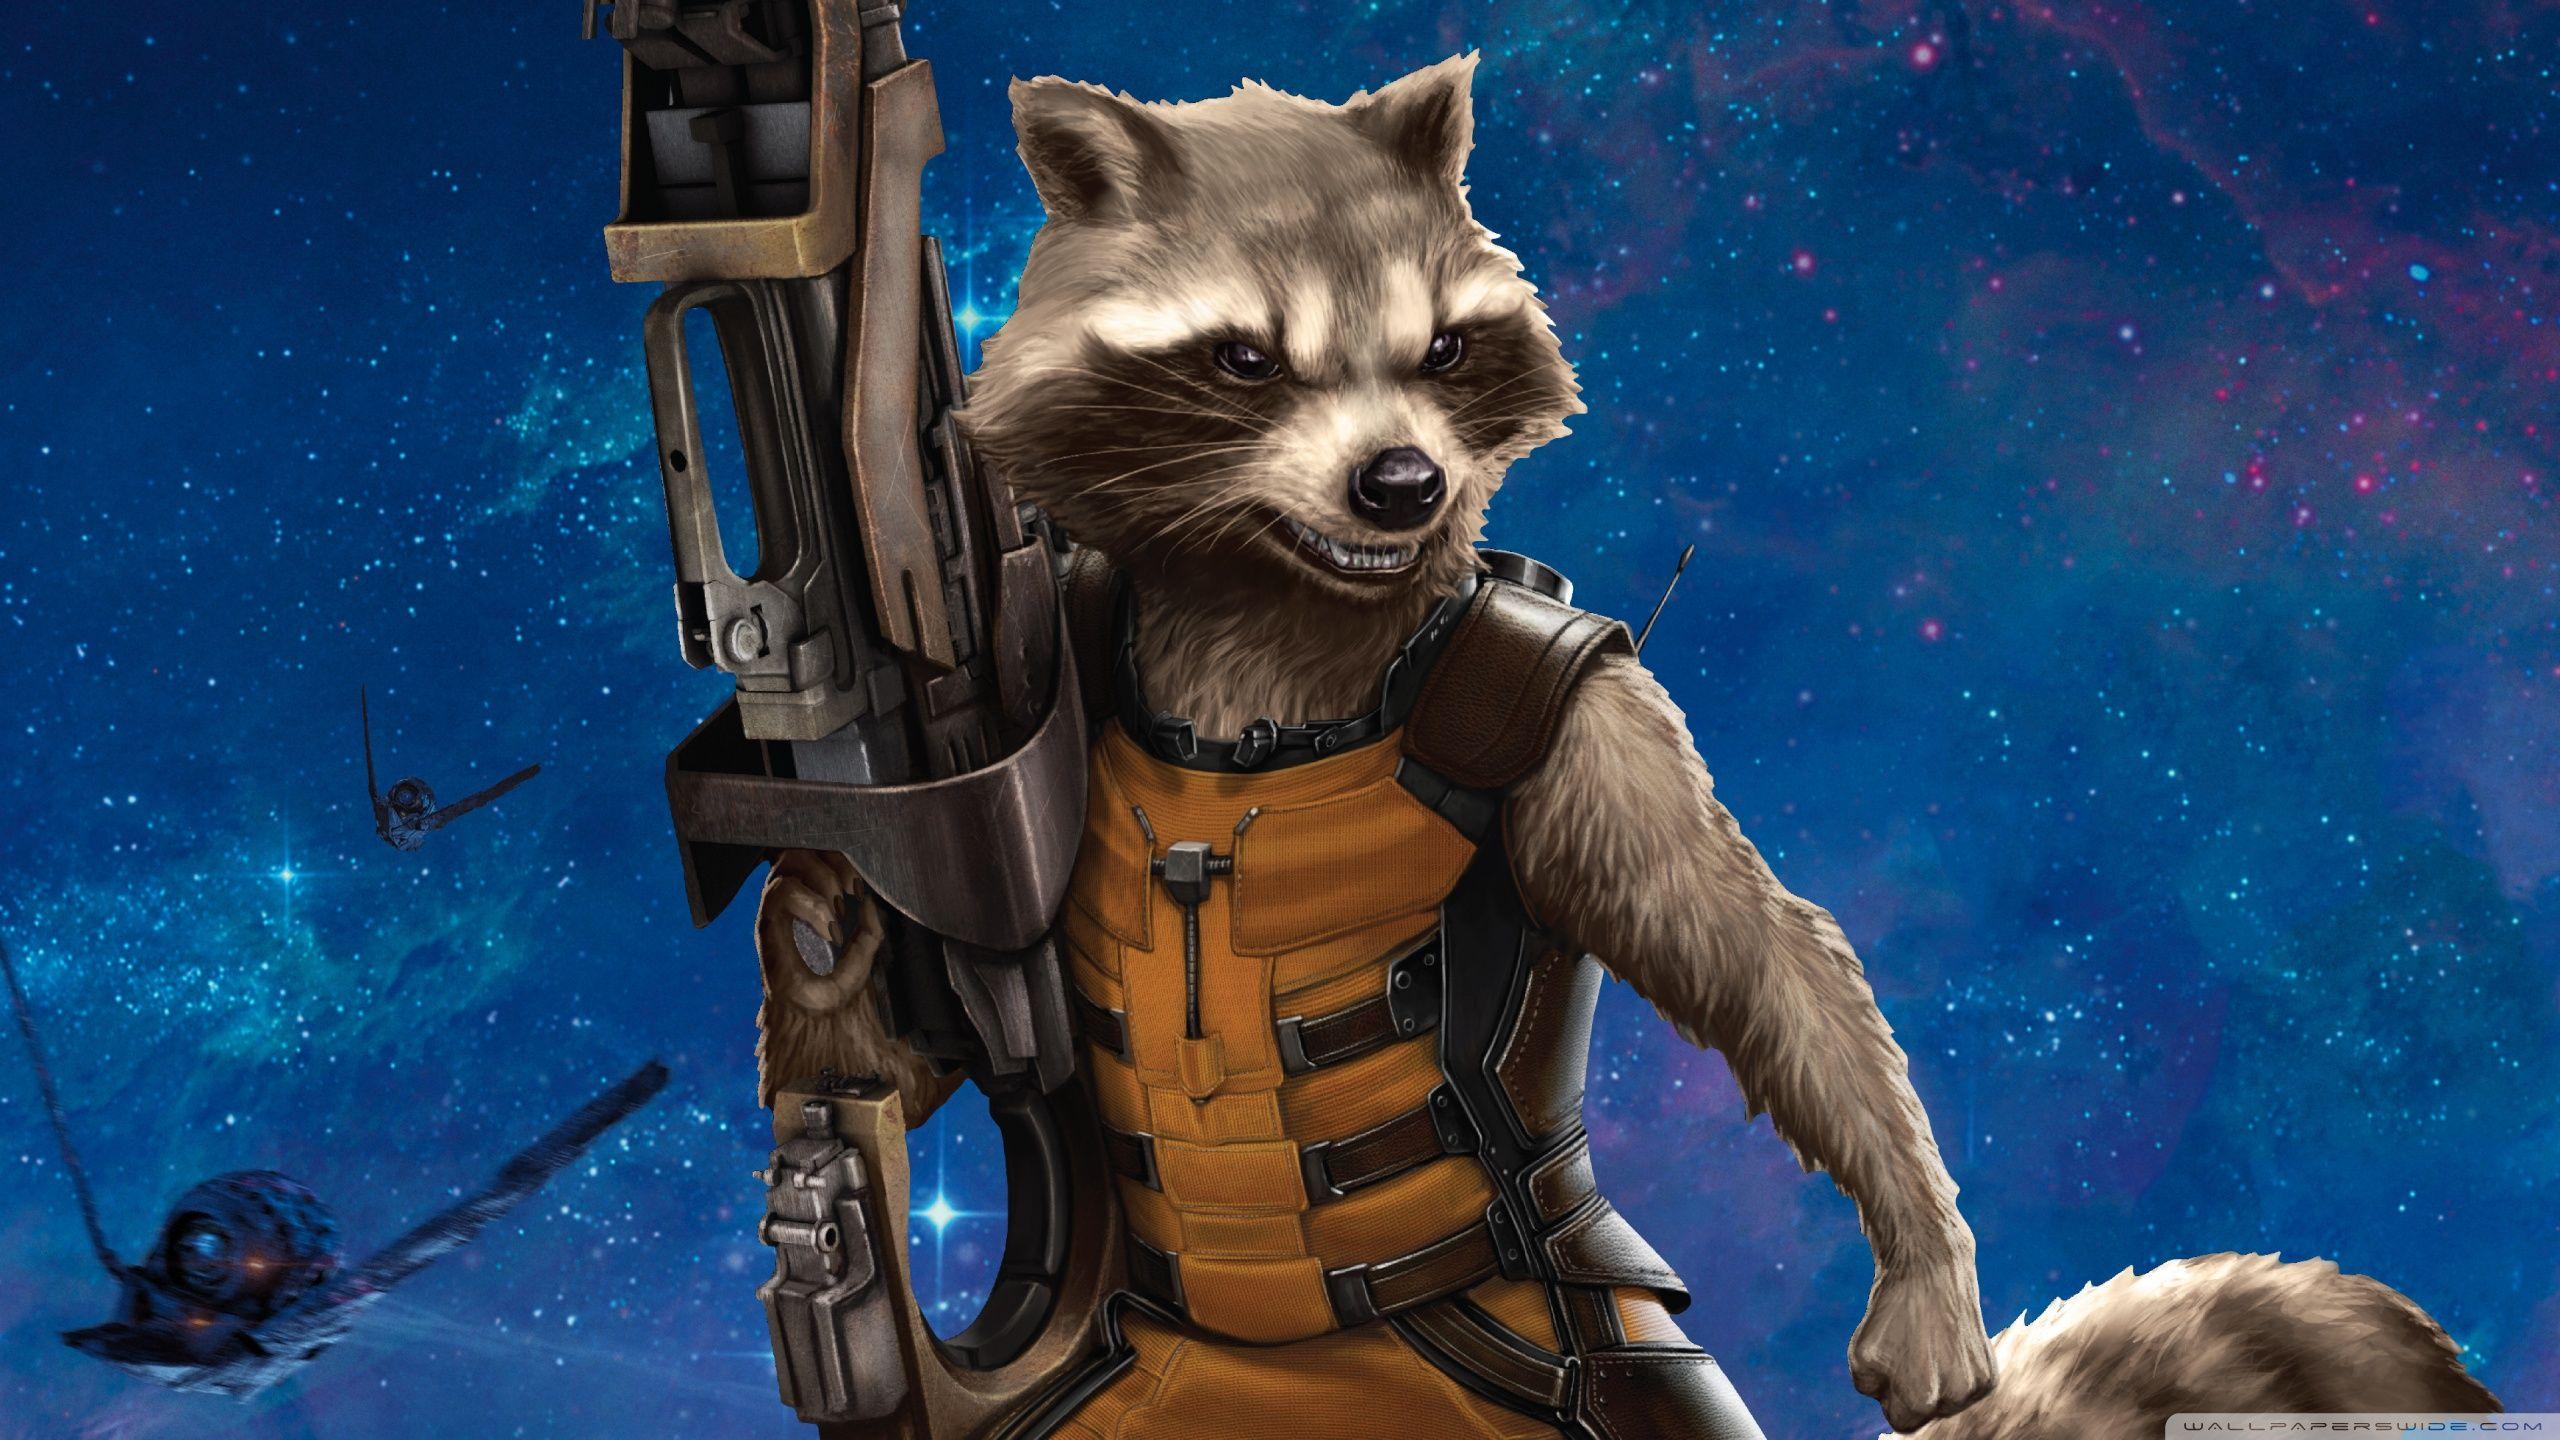 Rocket Raccoon 2014 HD desktop wallpaper, High Definition